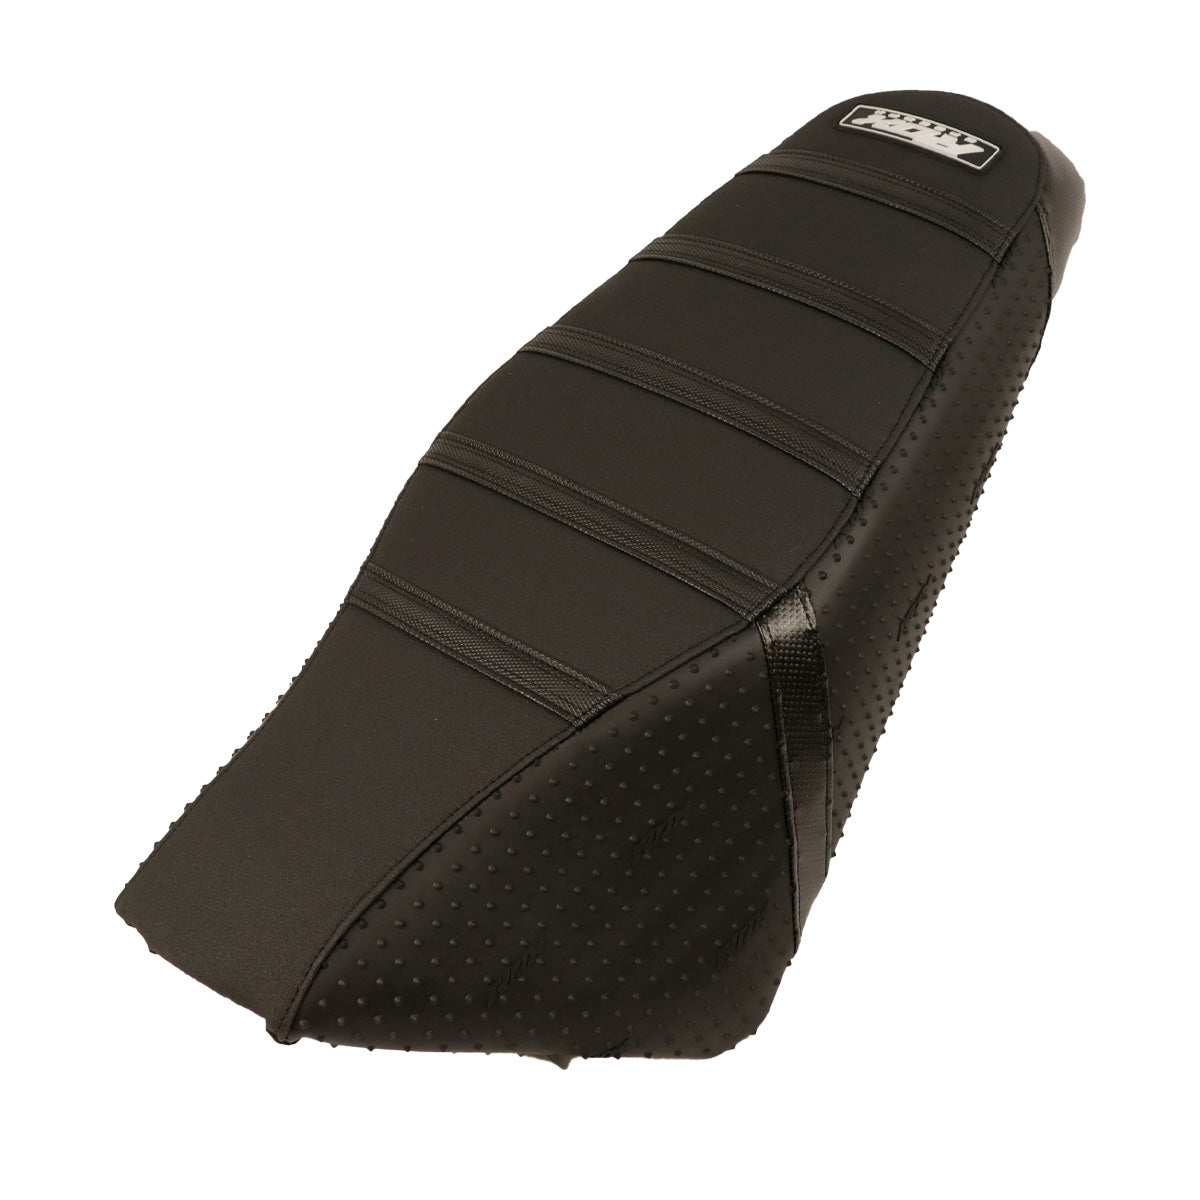 Versi Grip Polaris Matryx Trail Seat Cover